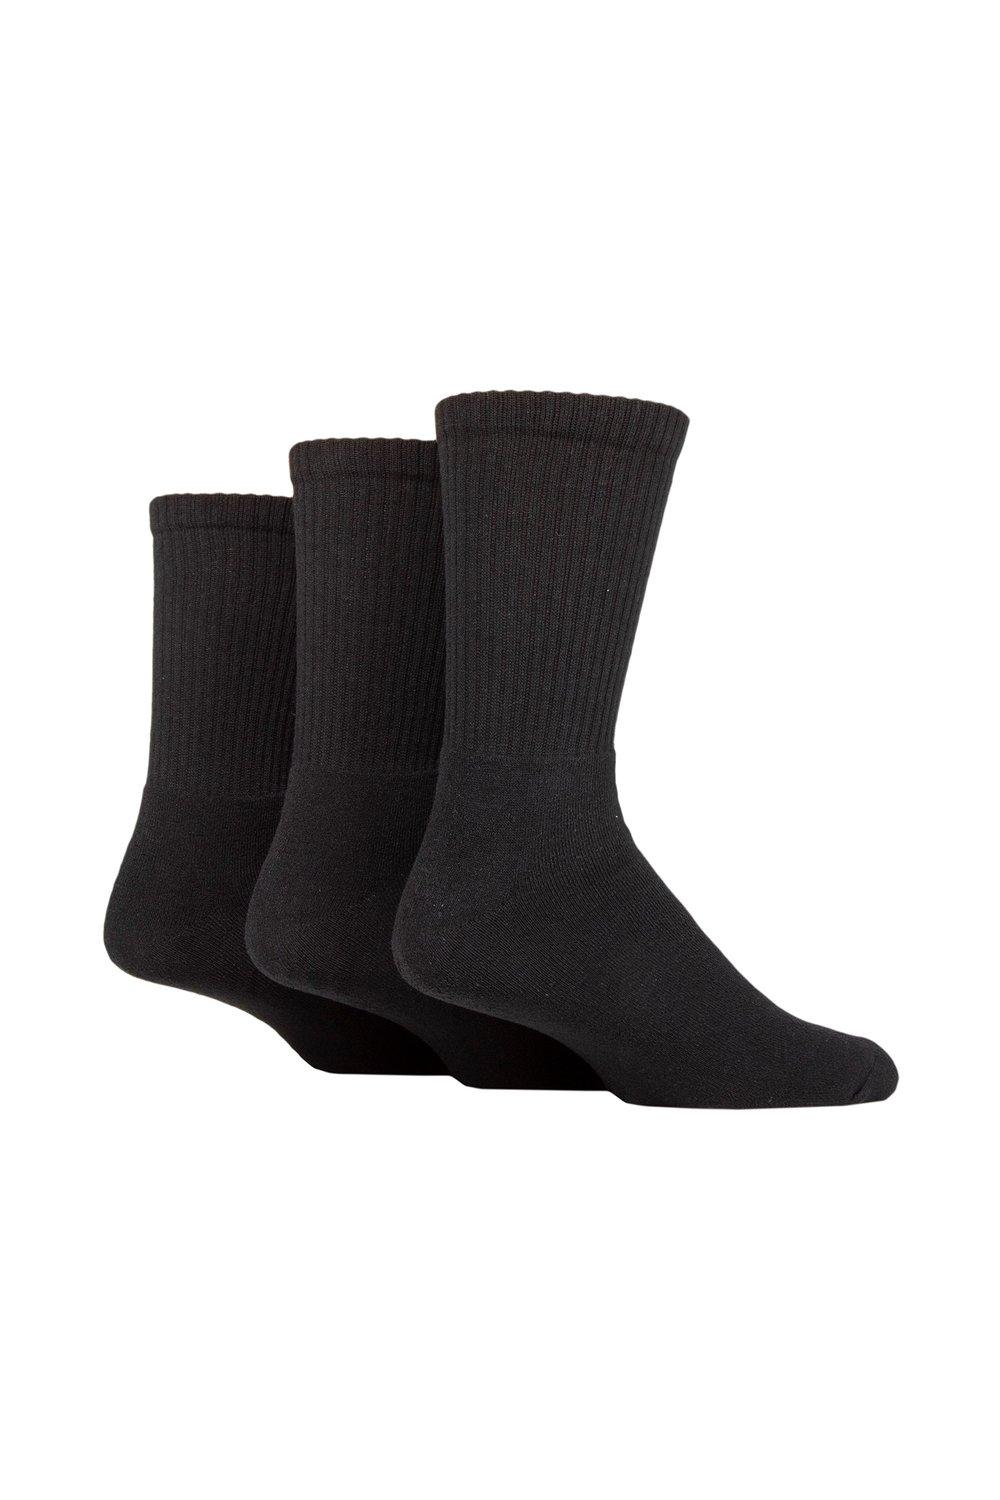 3 Pair 100% Recycled Plain Cotton Sports Socks